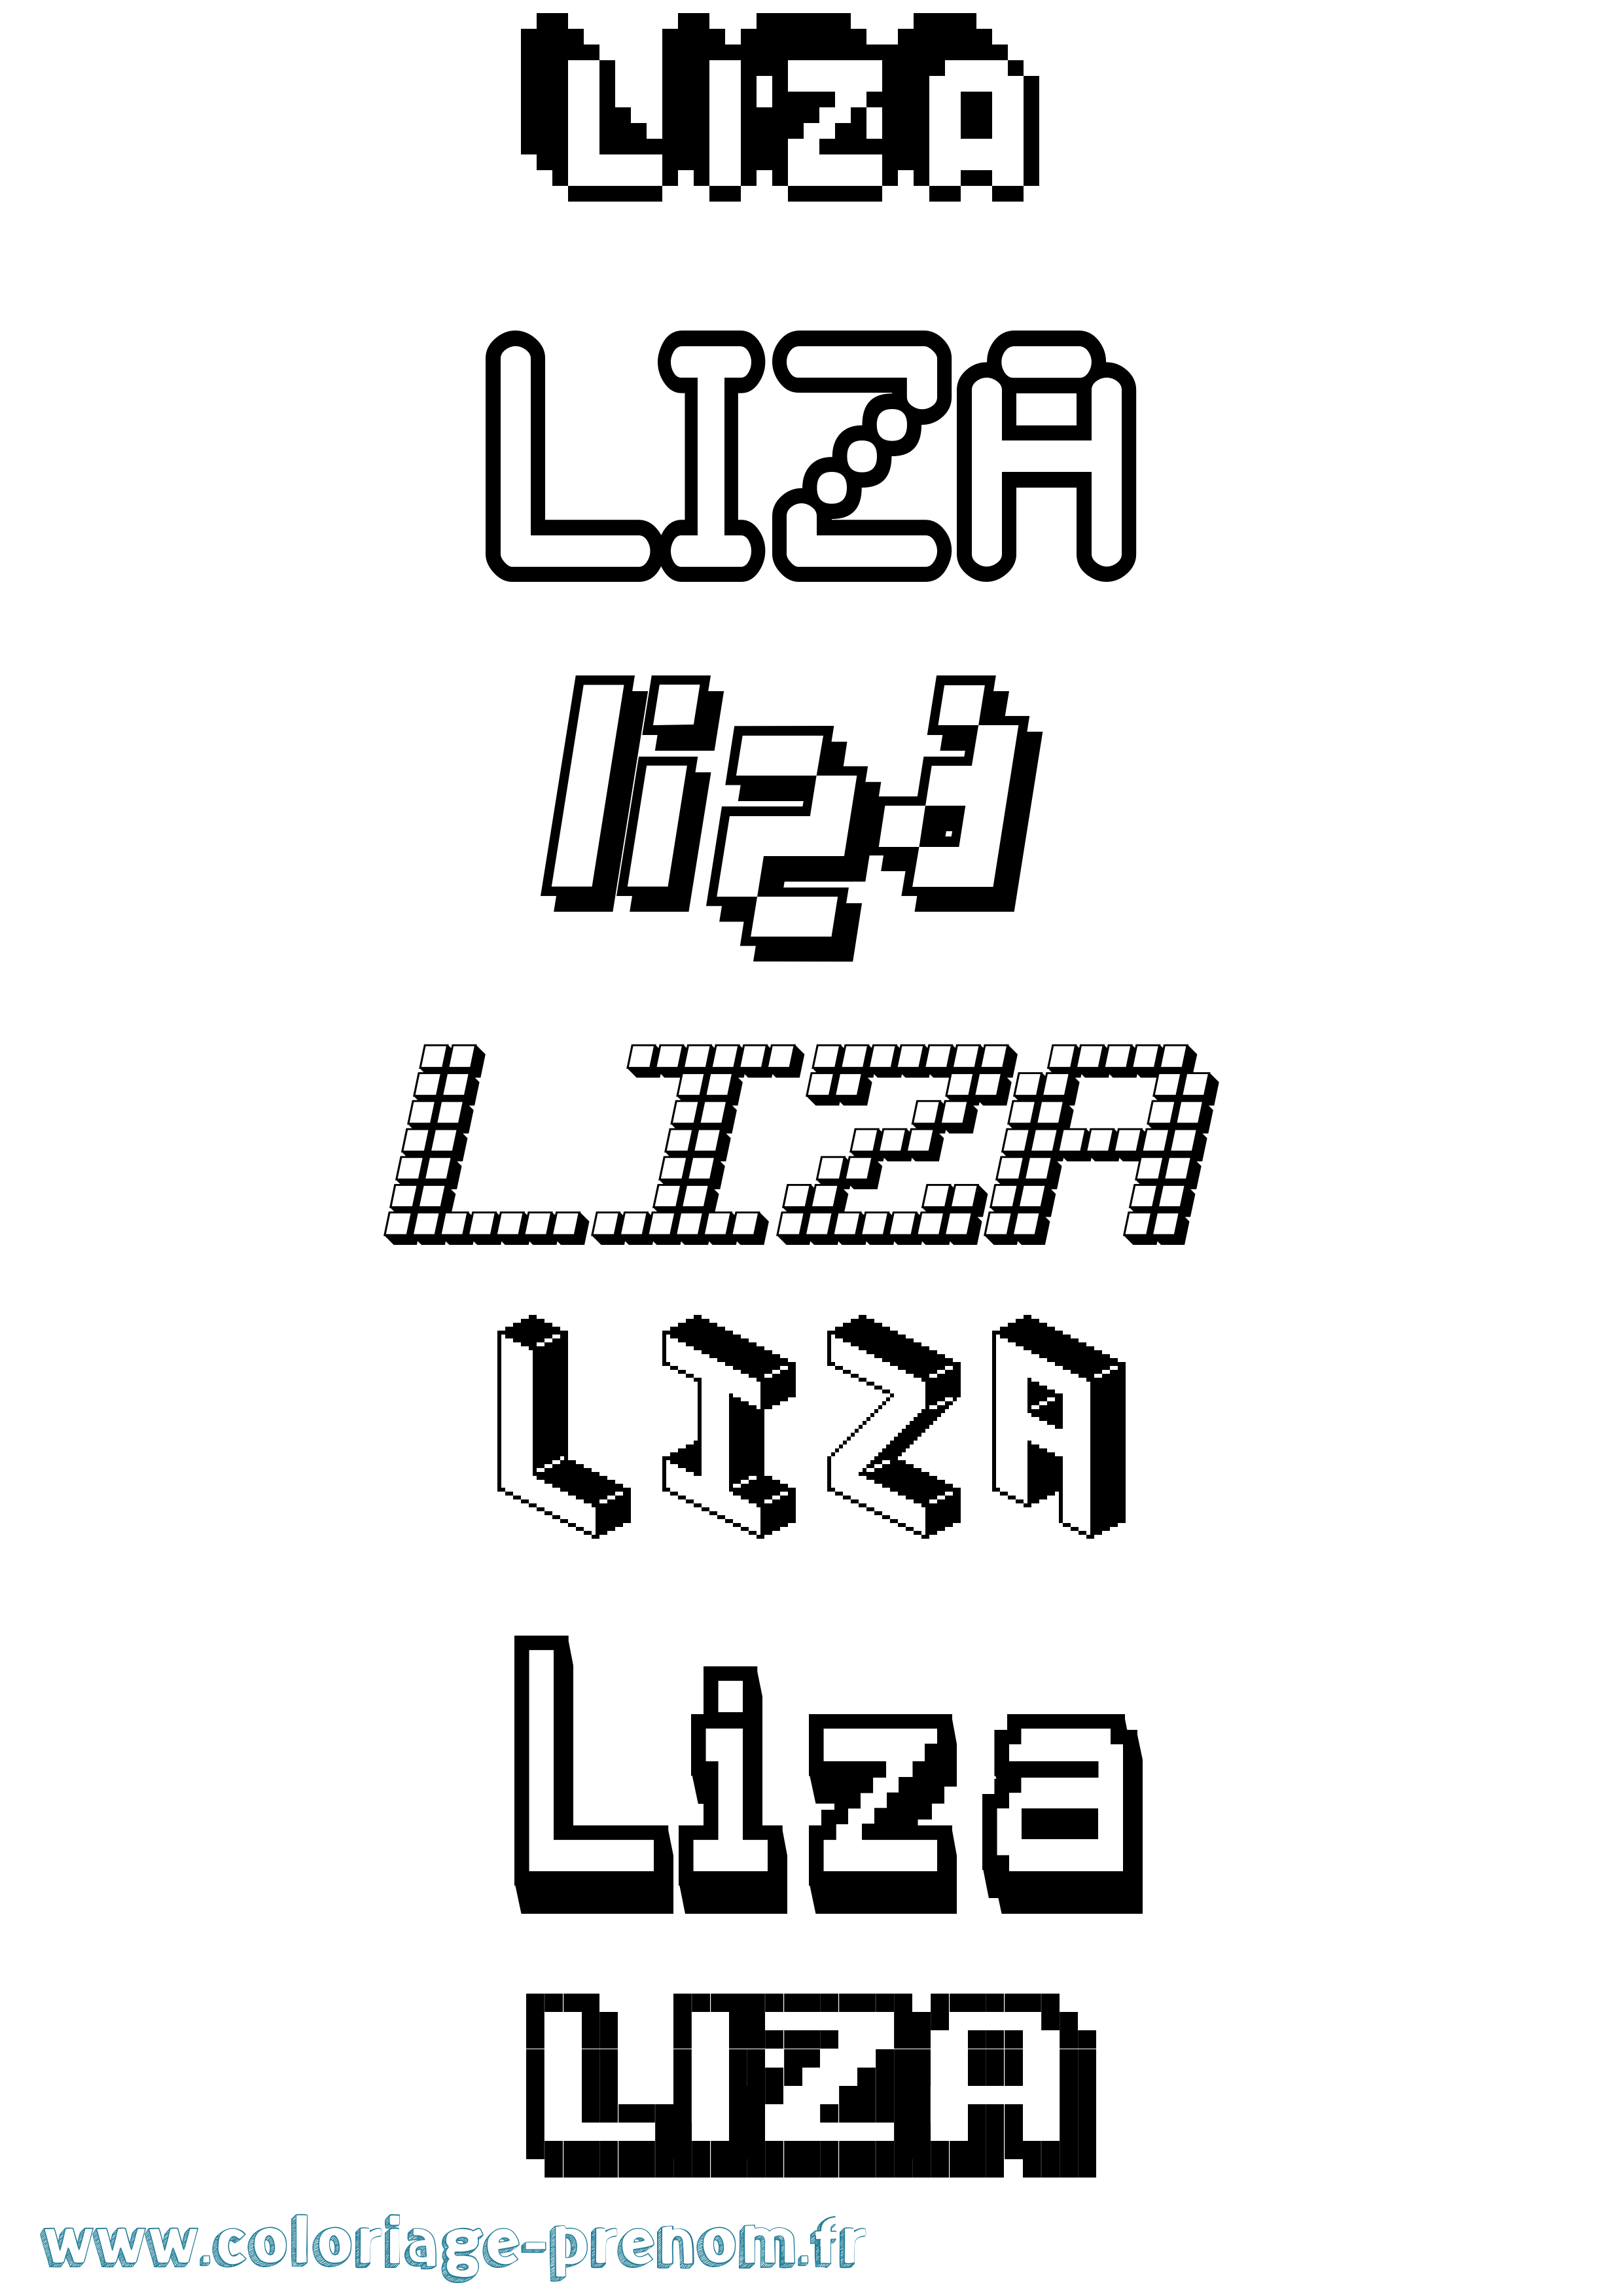 Coloriage prénom Liza